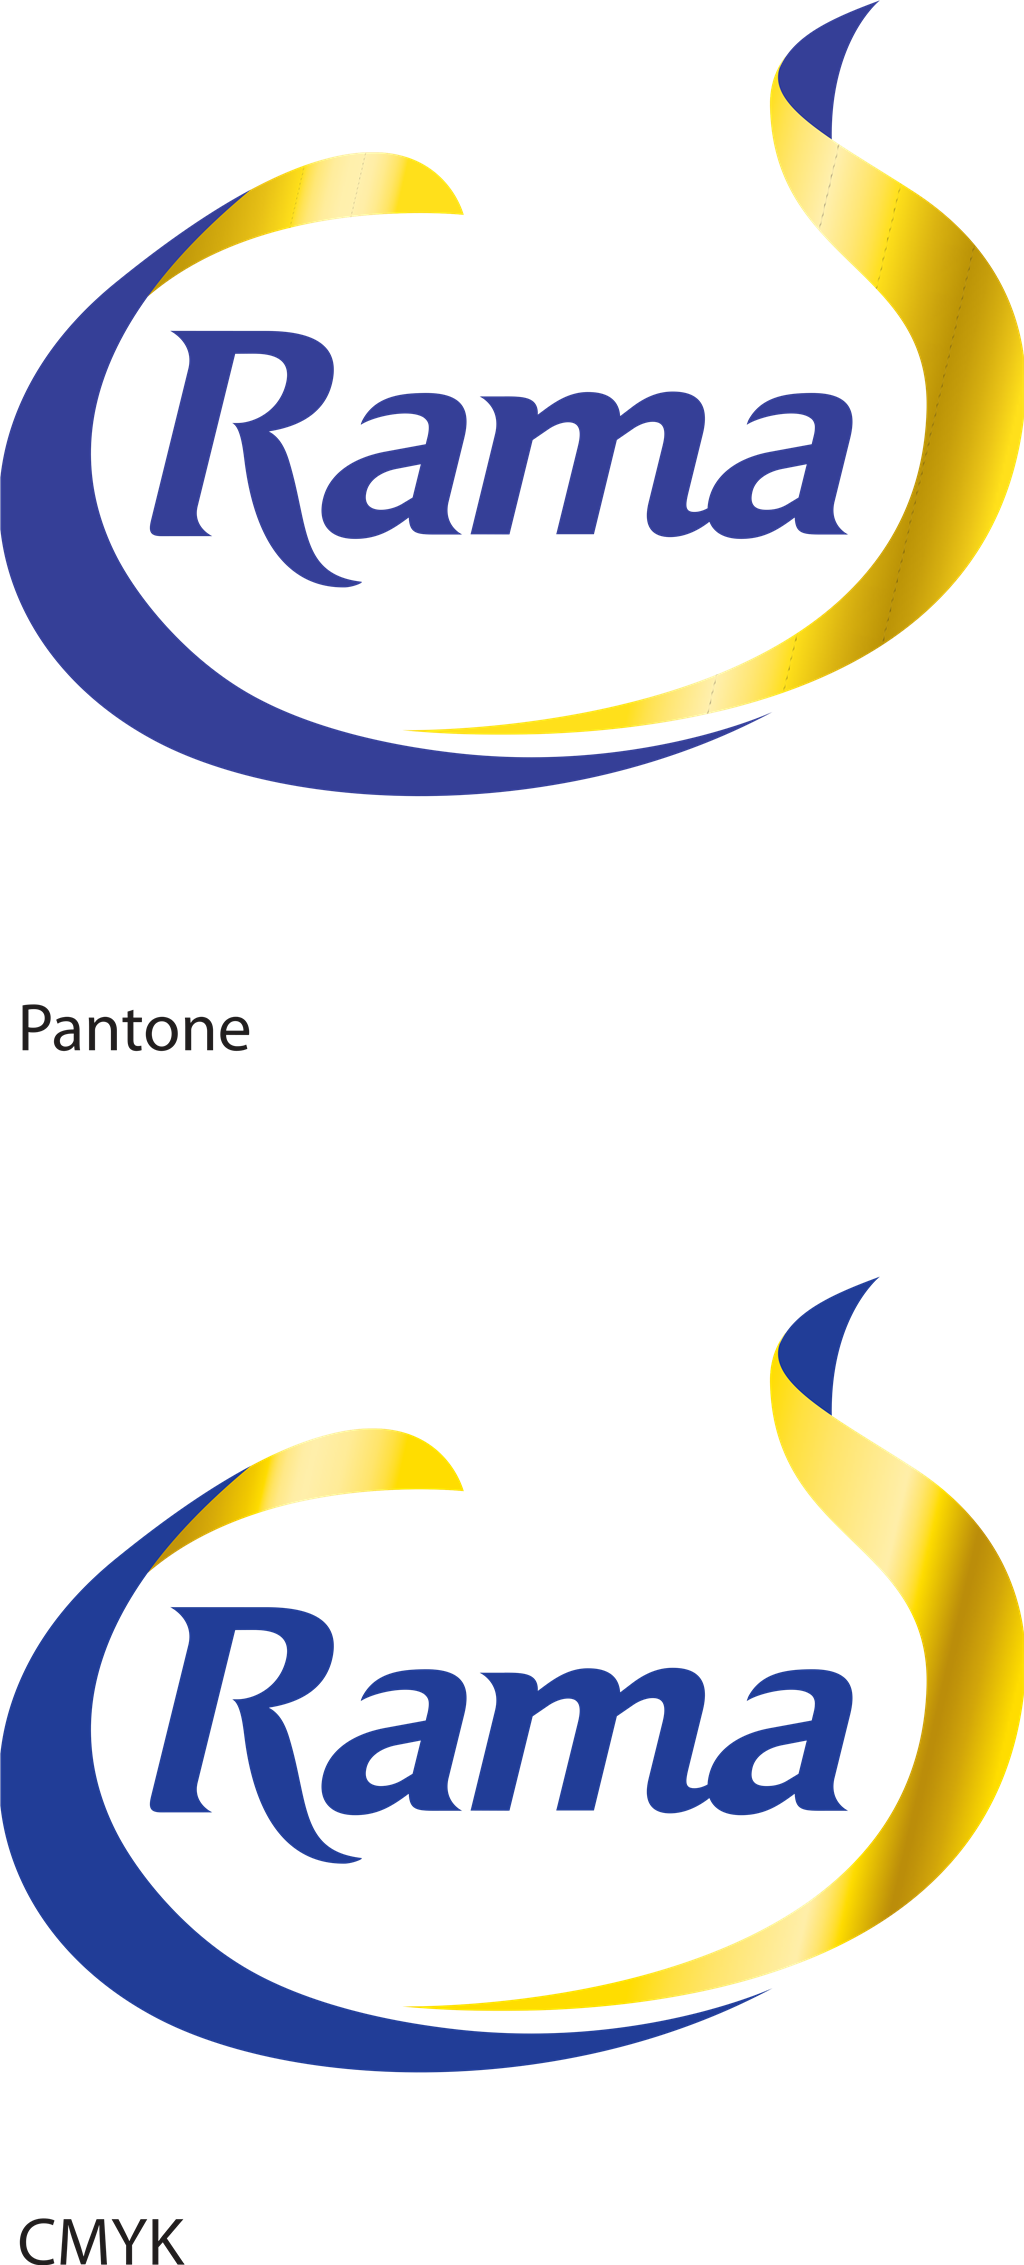 Rama logotype, transparent .png, medium, large